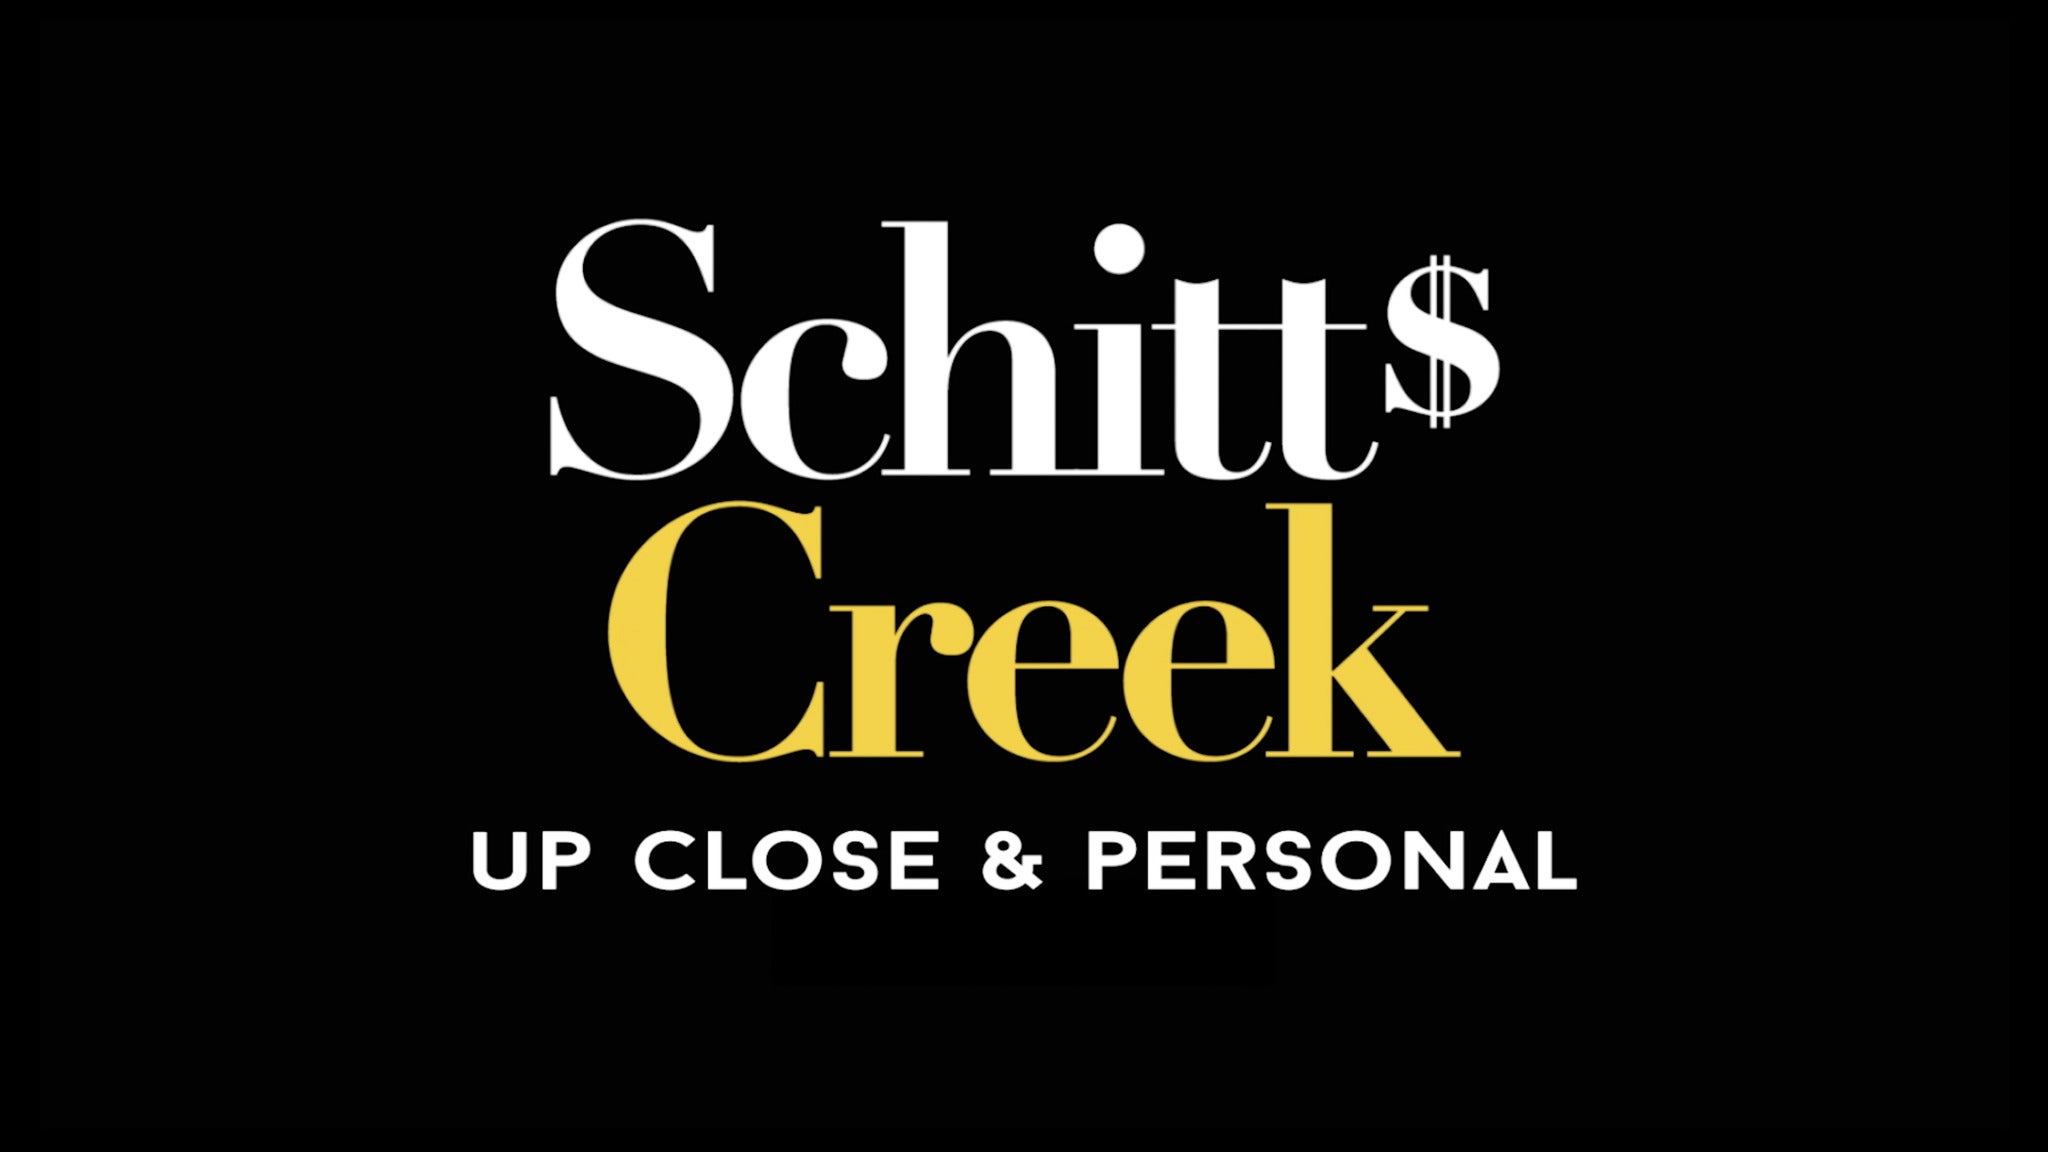 Schitt's Creek: The Farewell Tour in Hollywood promo photo for Social Media presale offer code